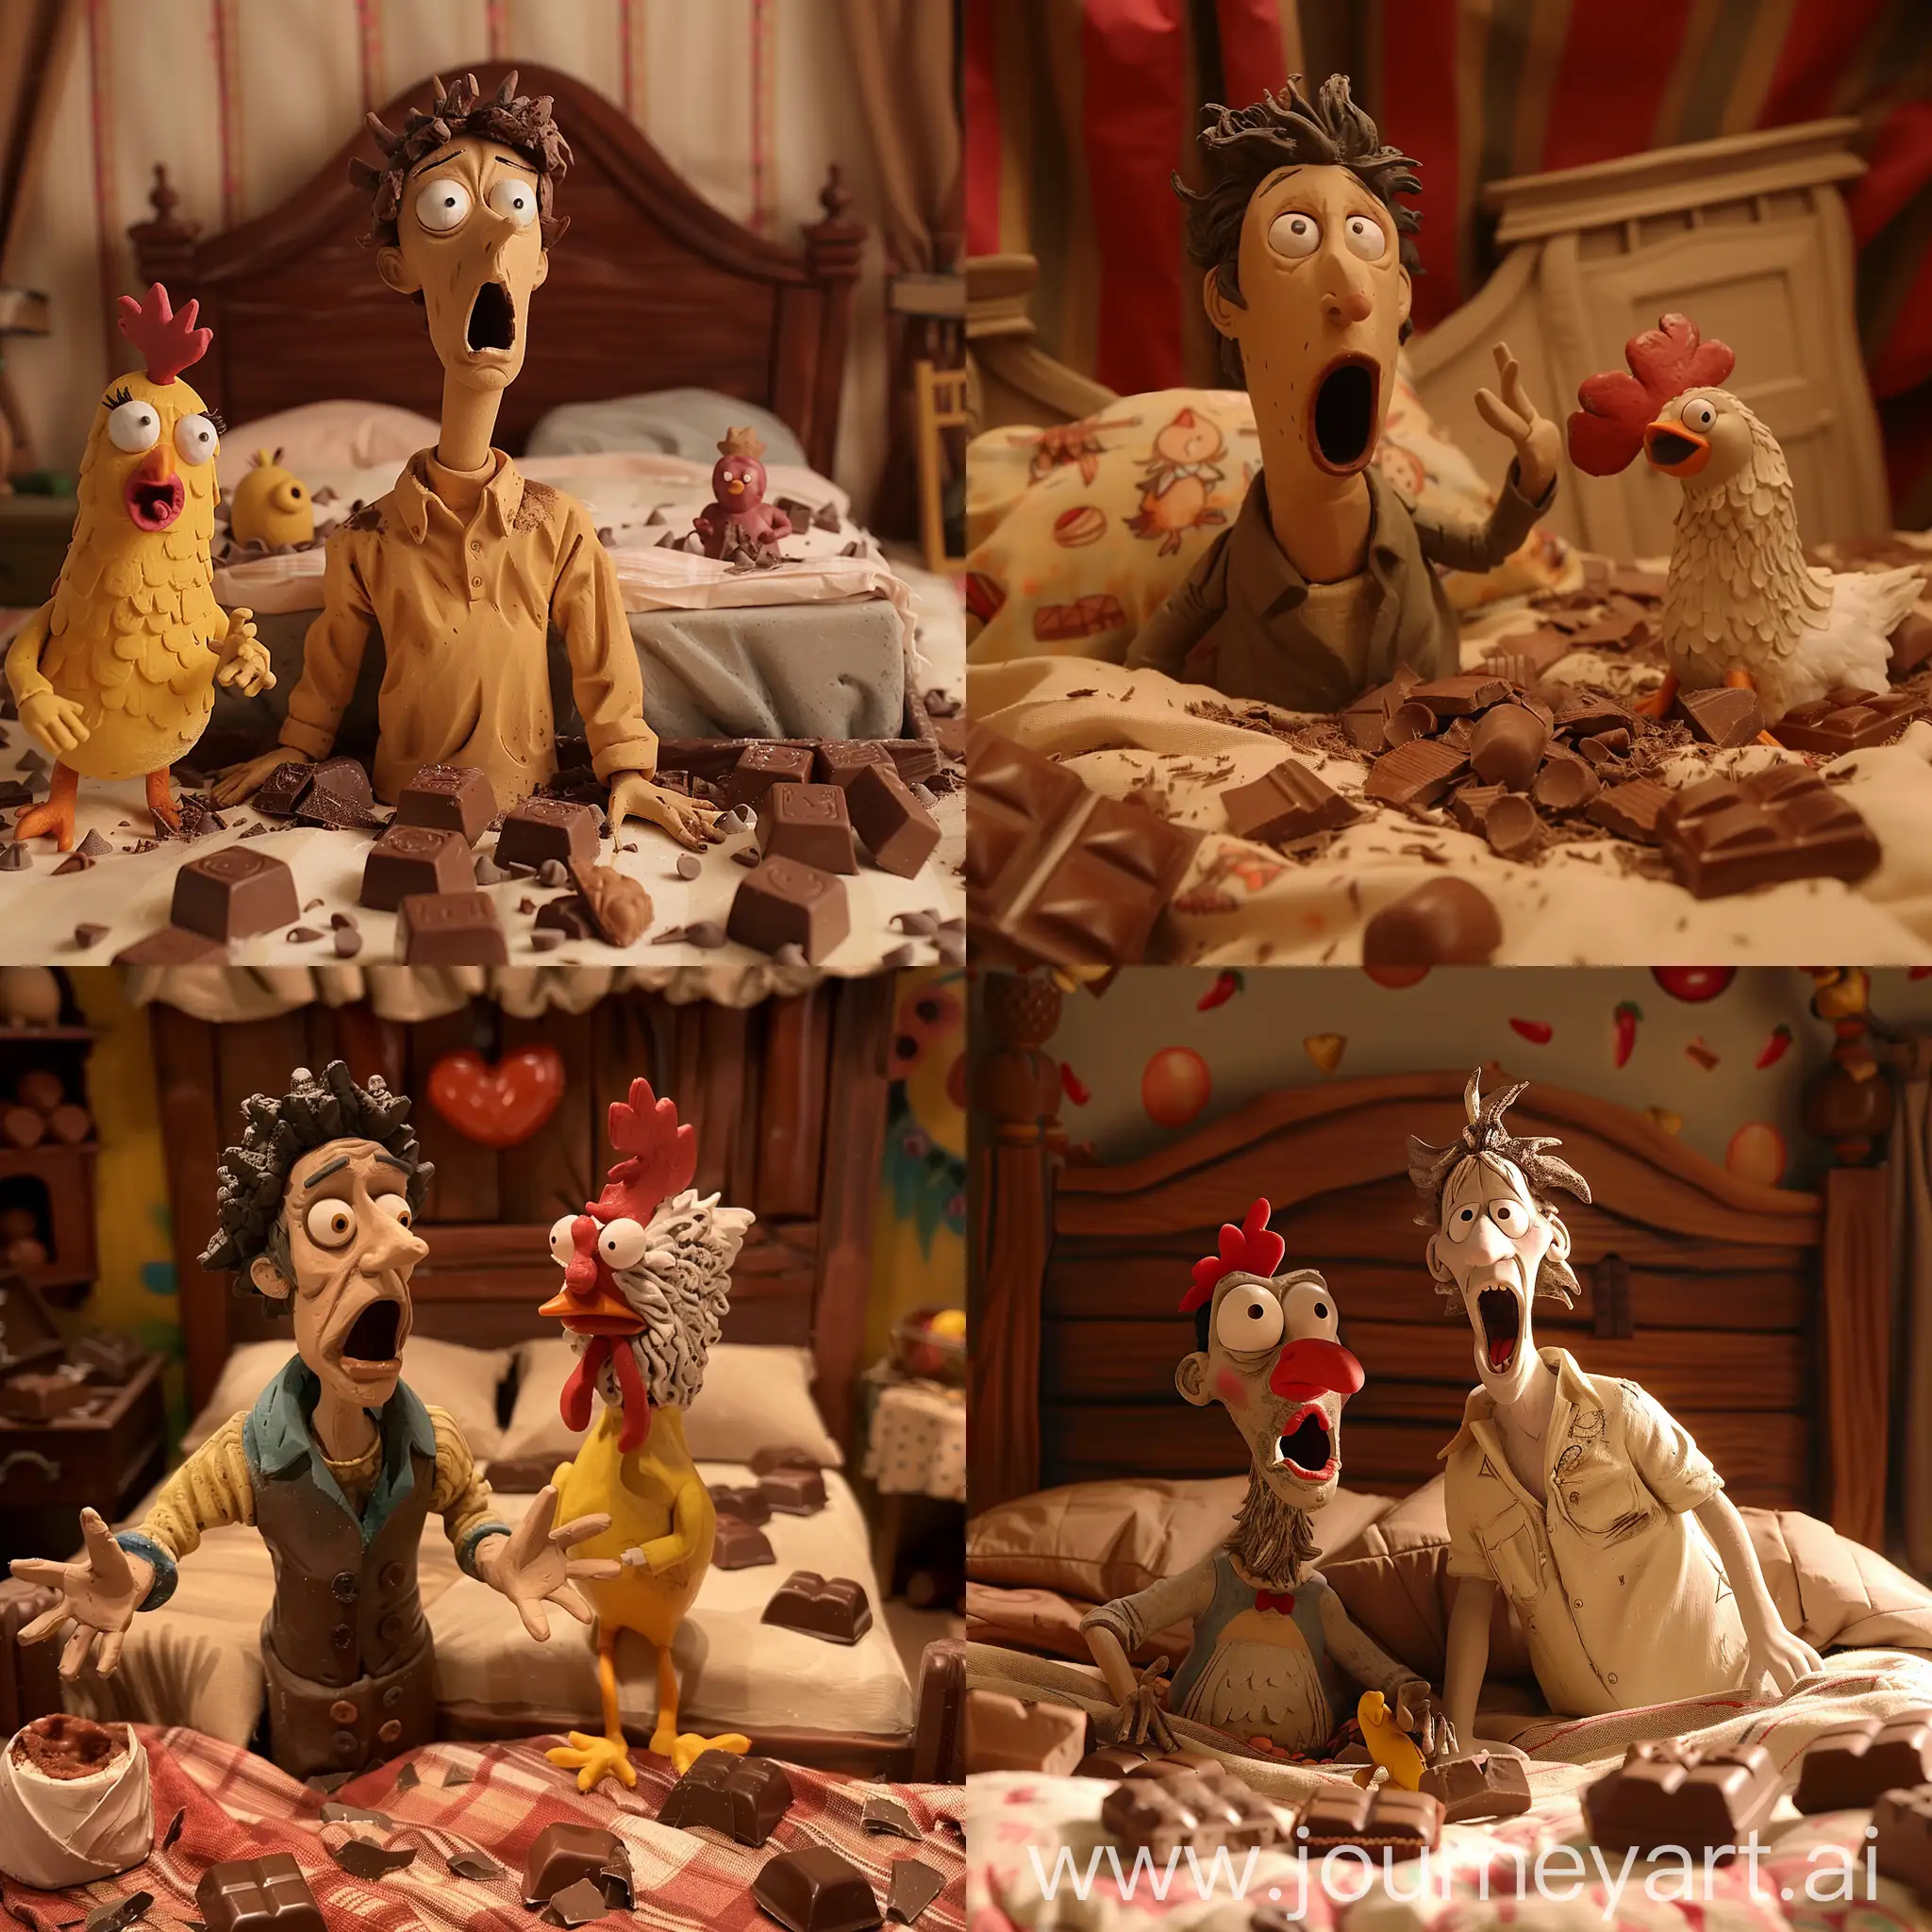 Mr-Tumnus-Shocked-with-Chicken-Run-Character-in-Romantic-Bedroom-Scene